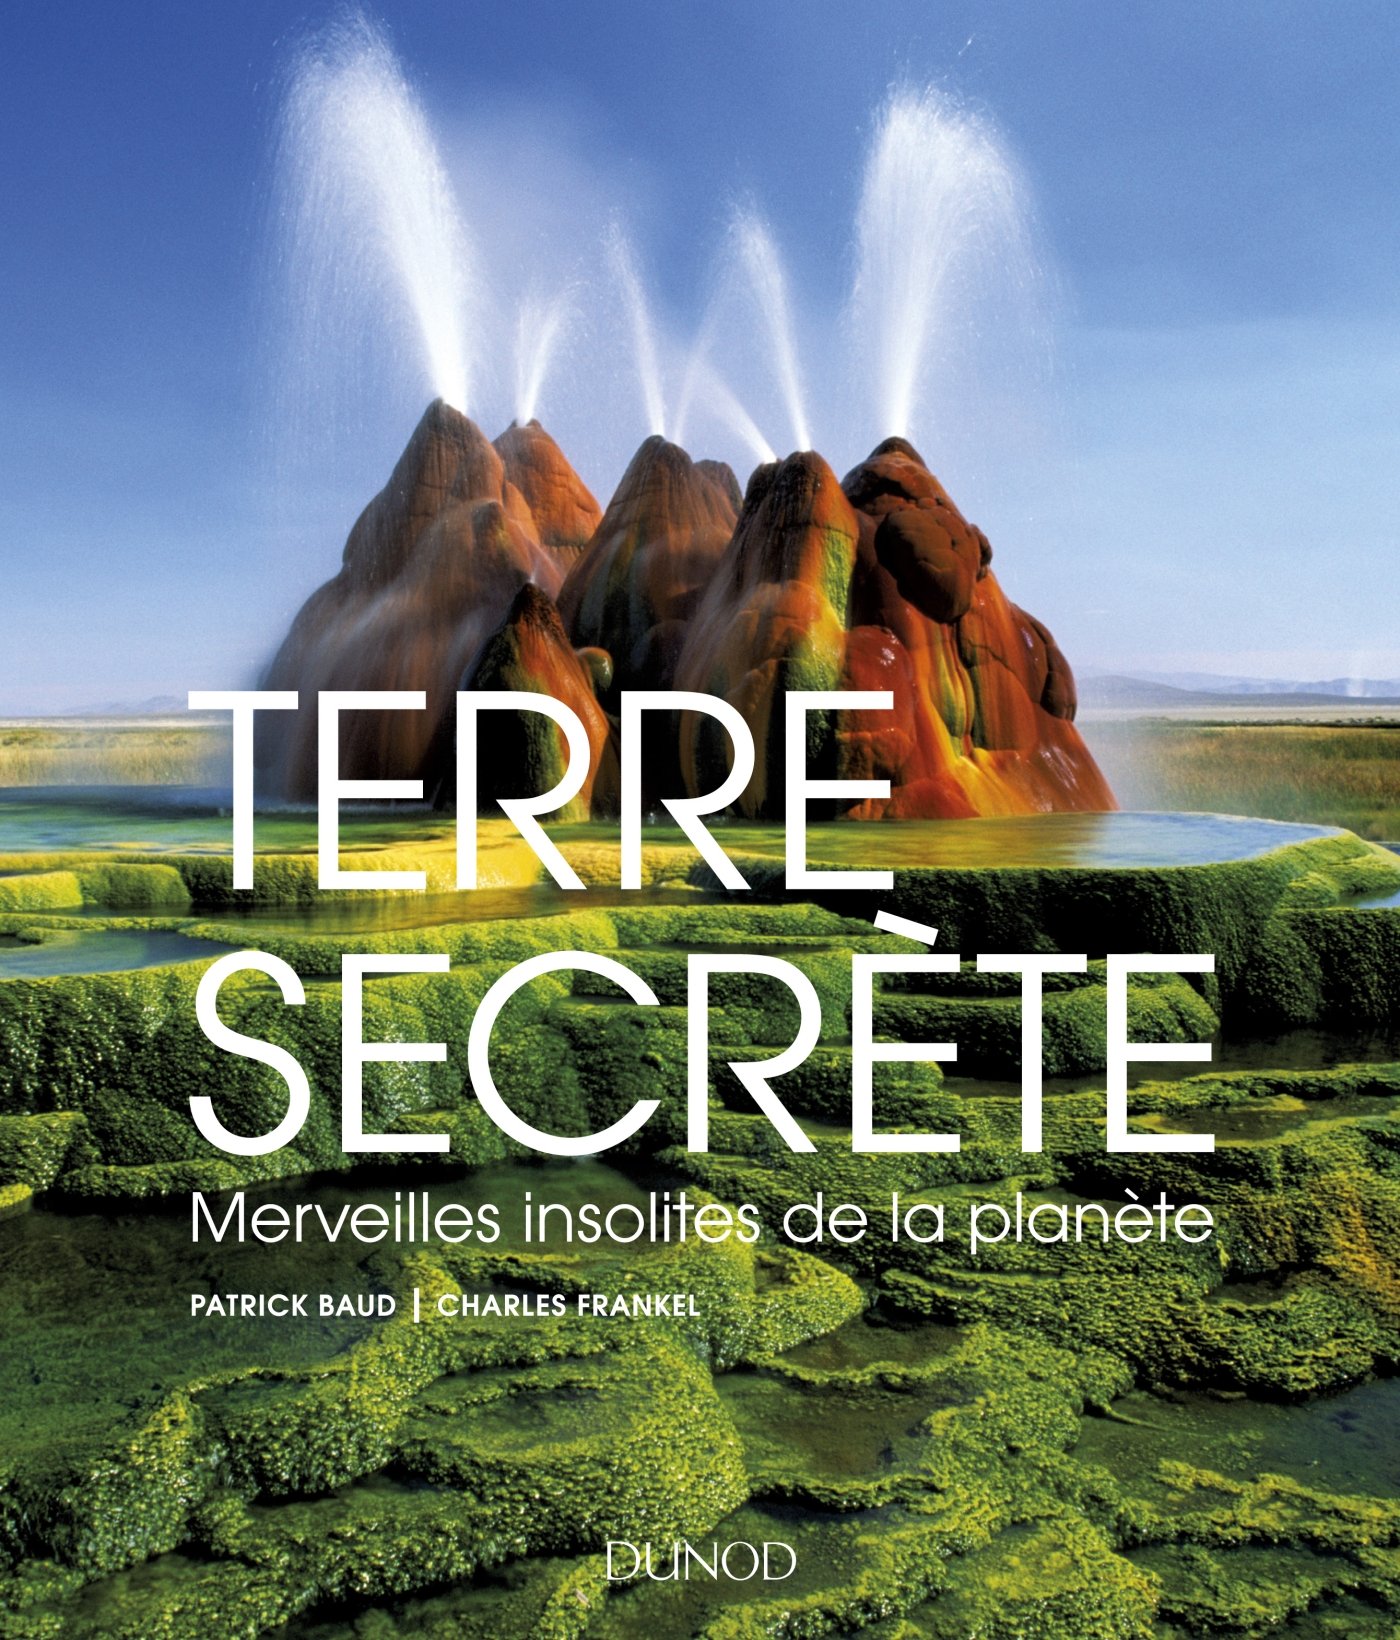 Terre secrete | Patrick Baud, Charles Frankel image14